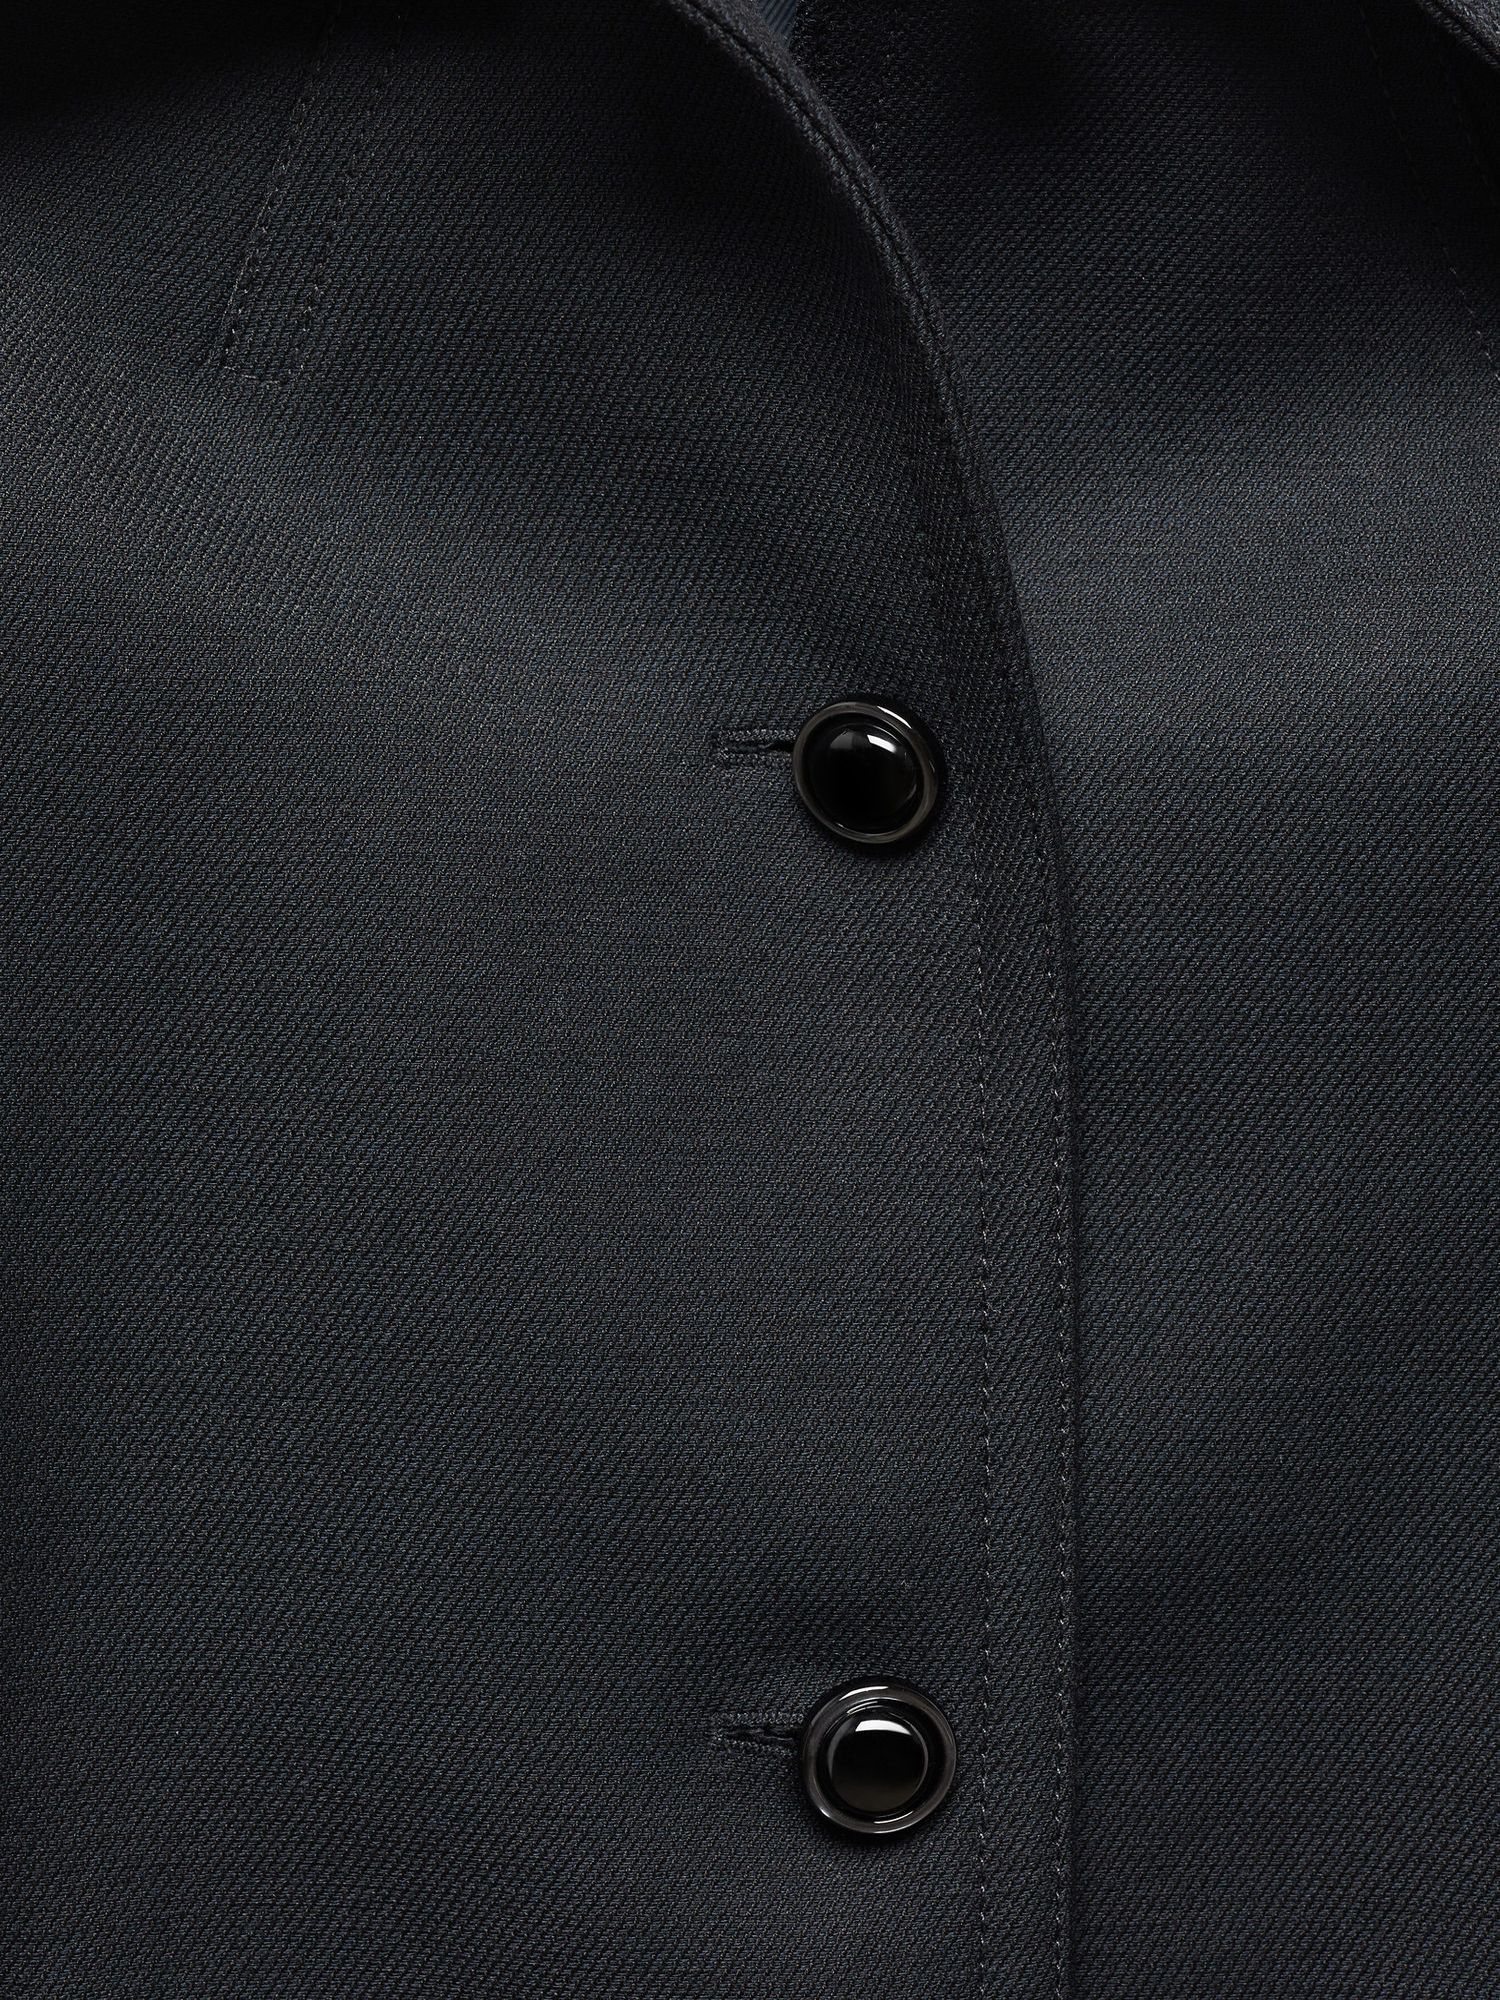 Mango Lively Shirt Collar Button Coat, Navy, M